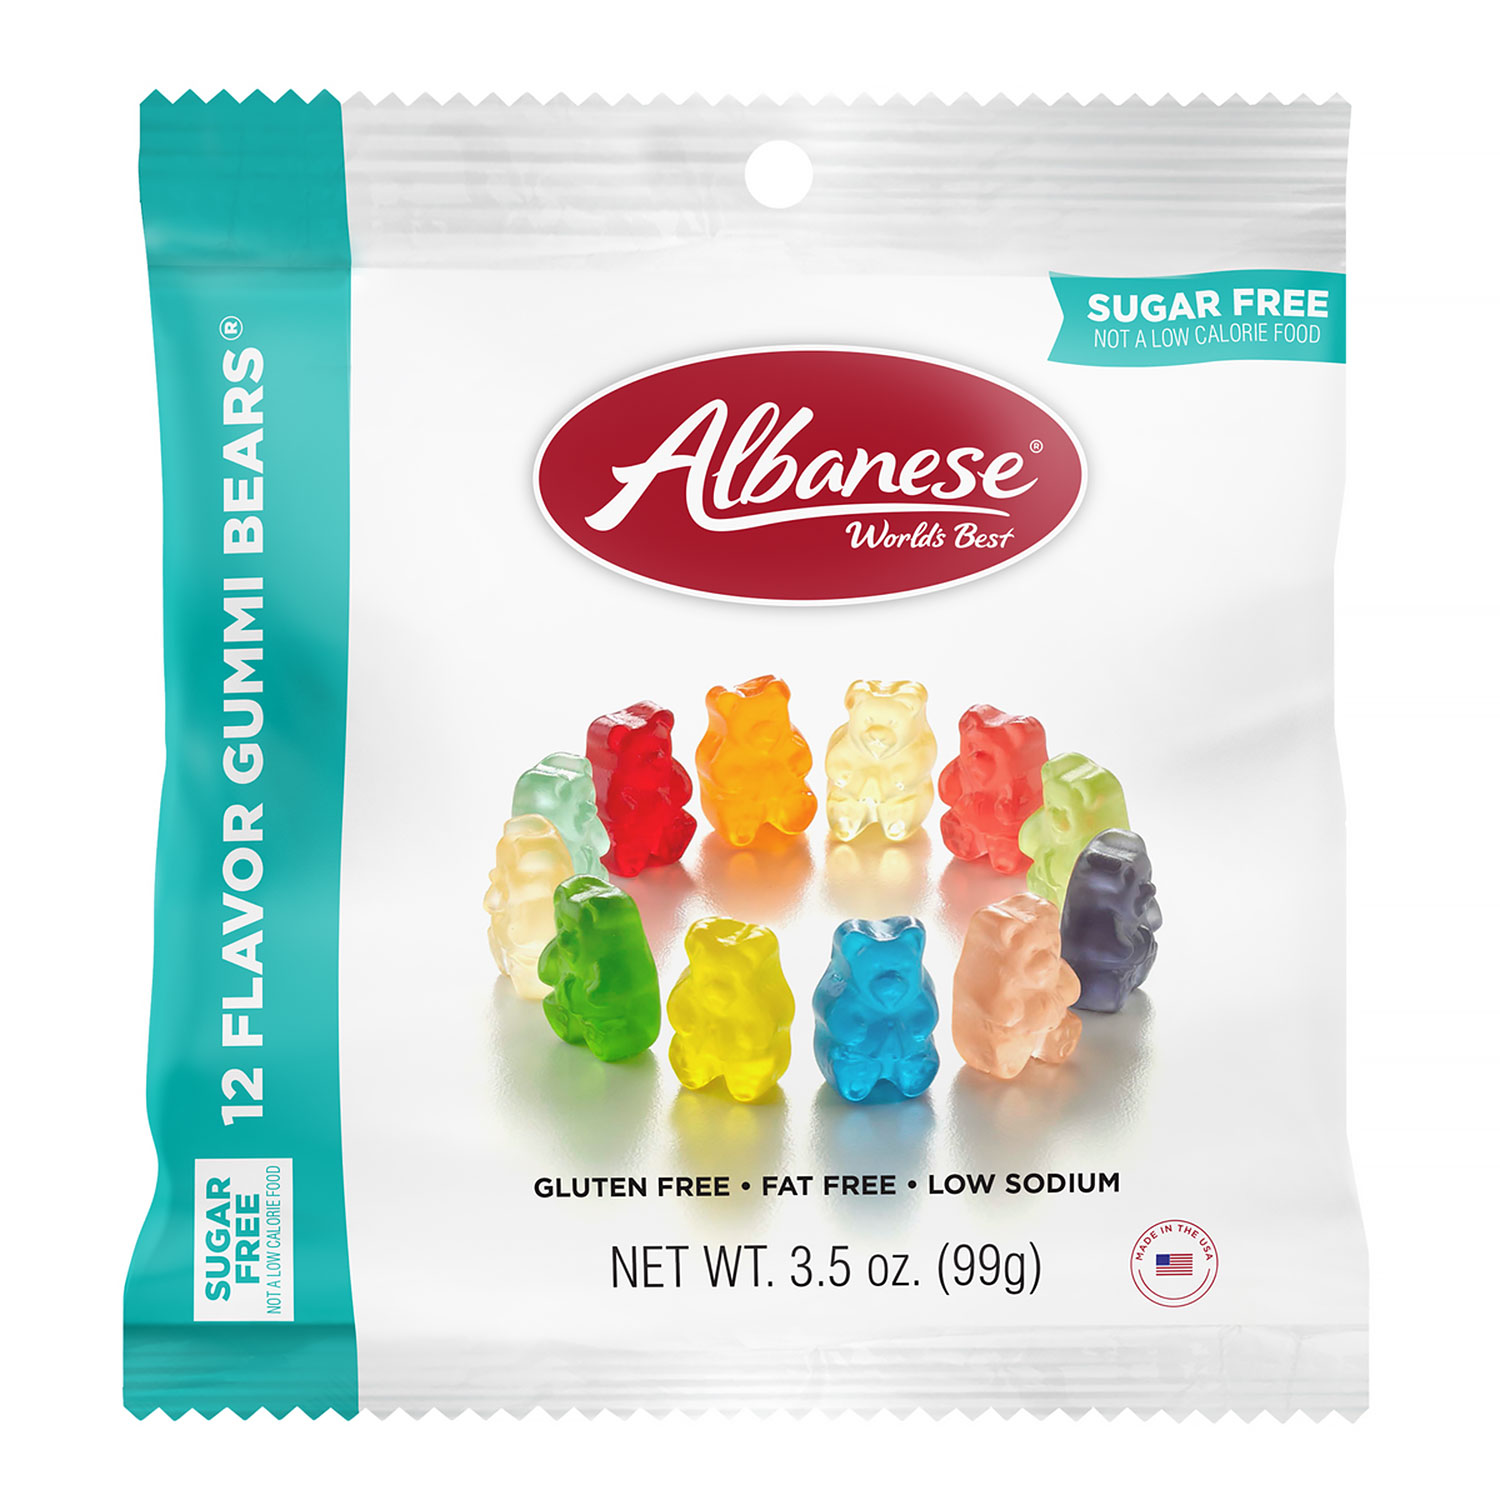 Sugar Free Gummi Bears